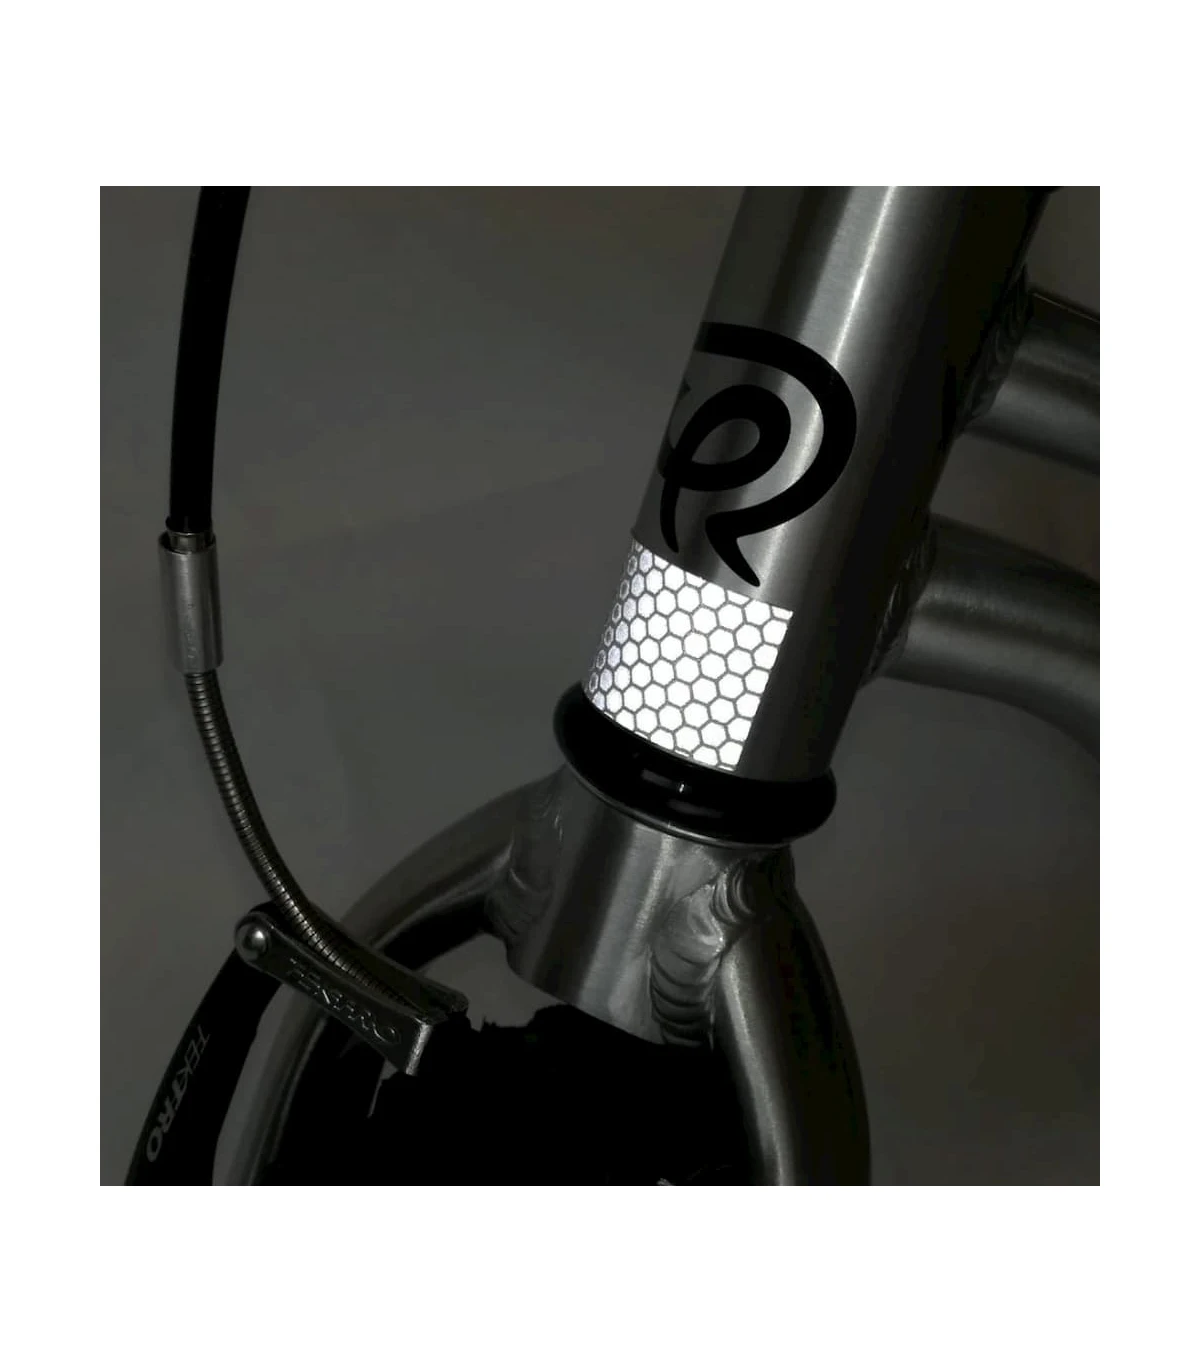 5cm * 1m Fahrradkörper Reflektierende Sicherheitsaufkleber Reflektierende  Sicherheitswarnung Auffälligkeit Tape Film Sticker Strip Fahrradzubehör